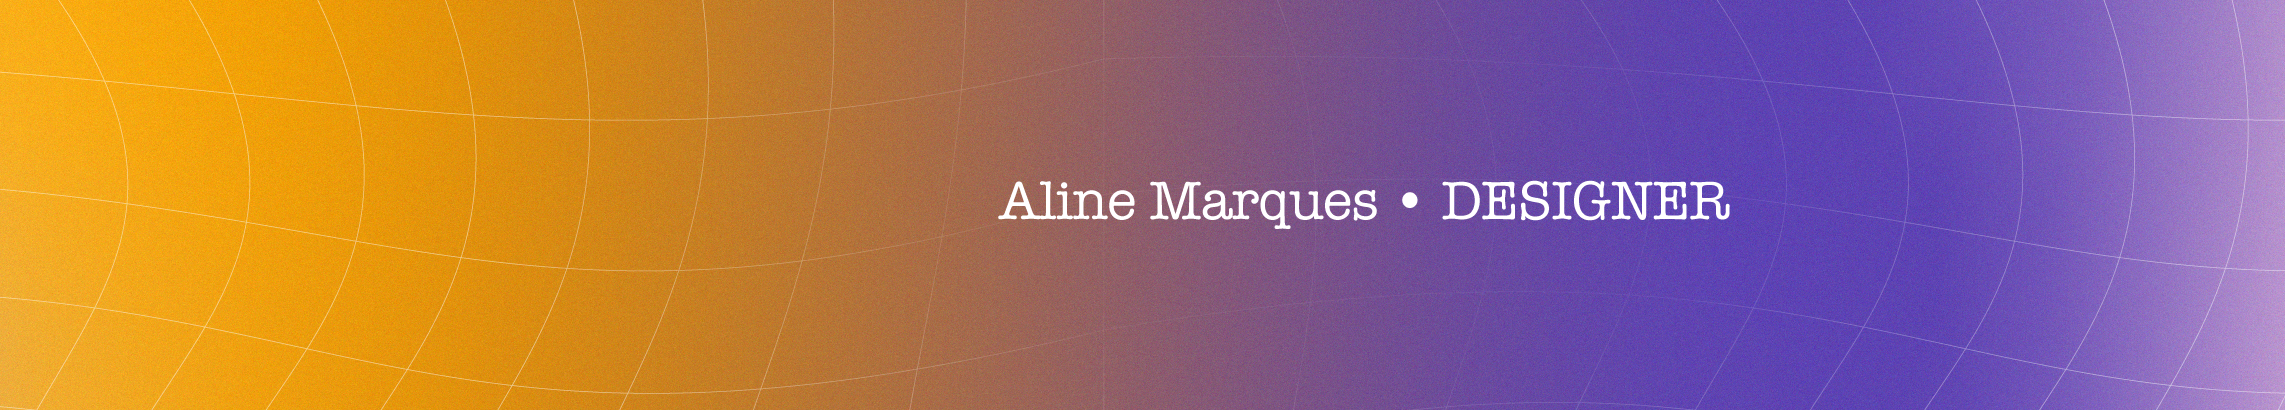 Aline Marques's profile banner